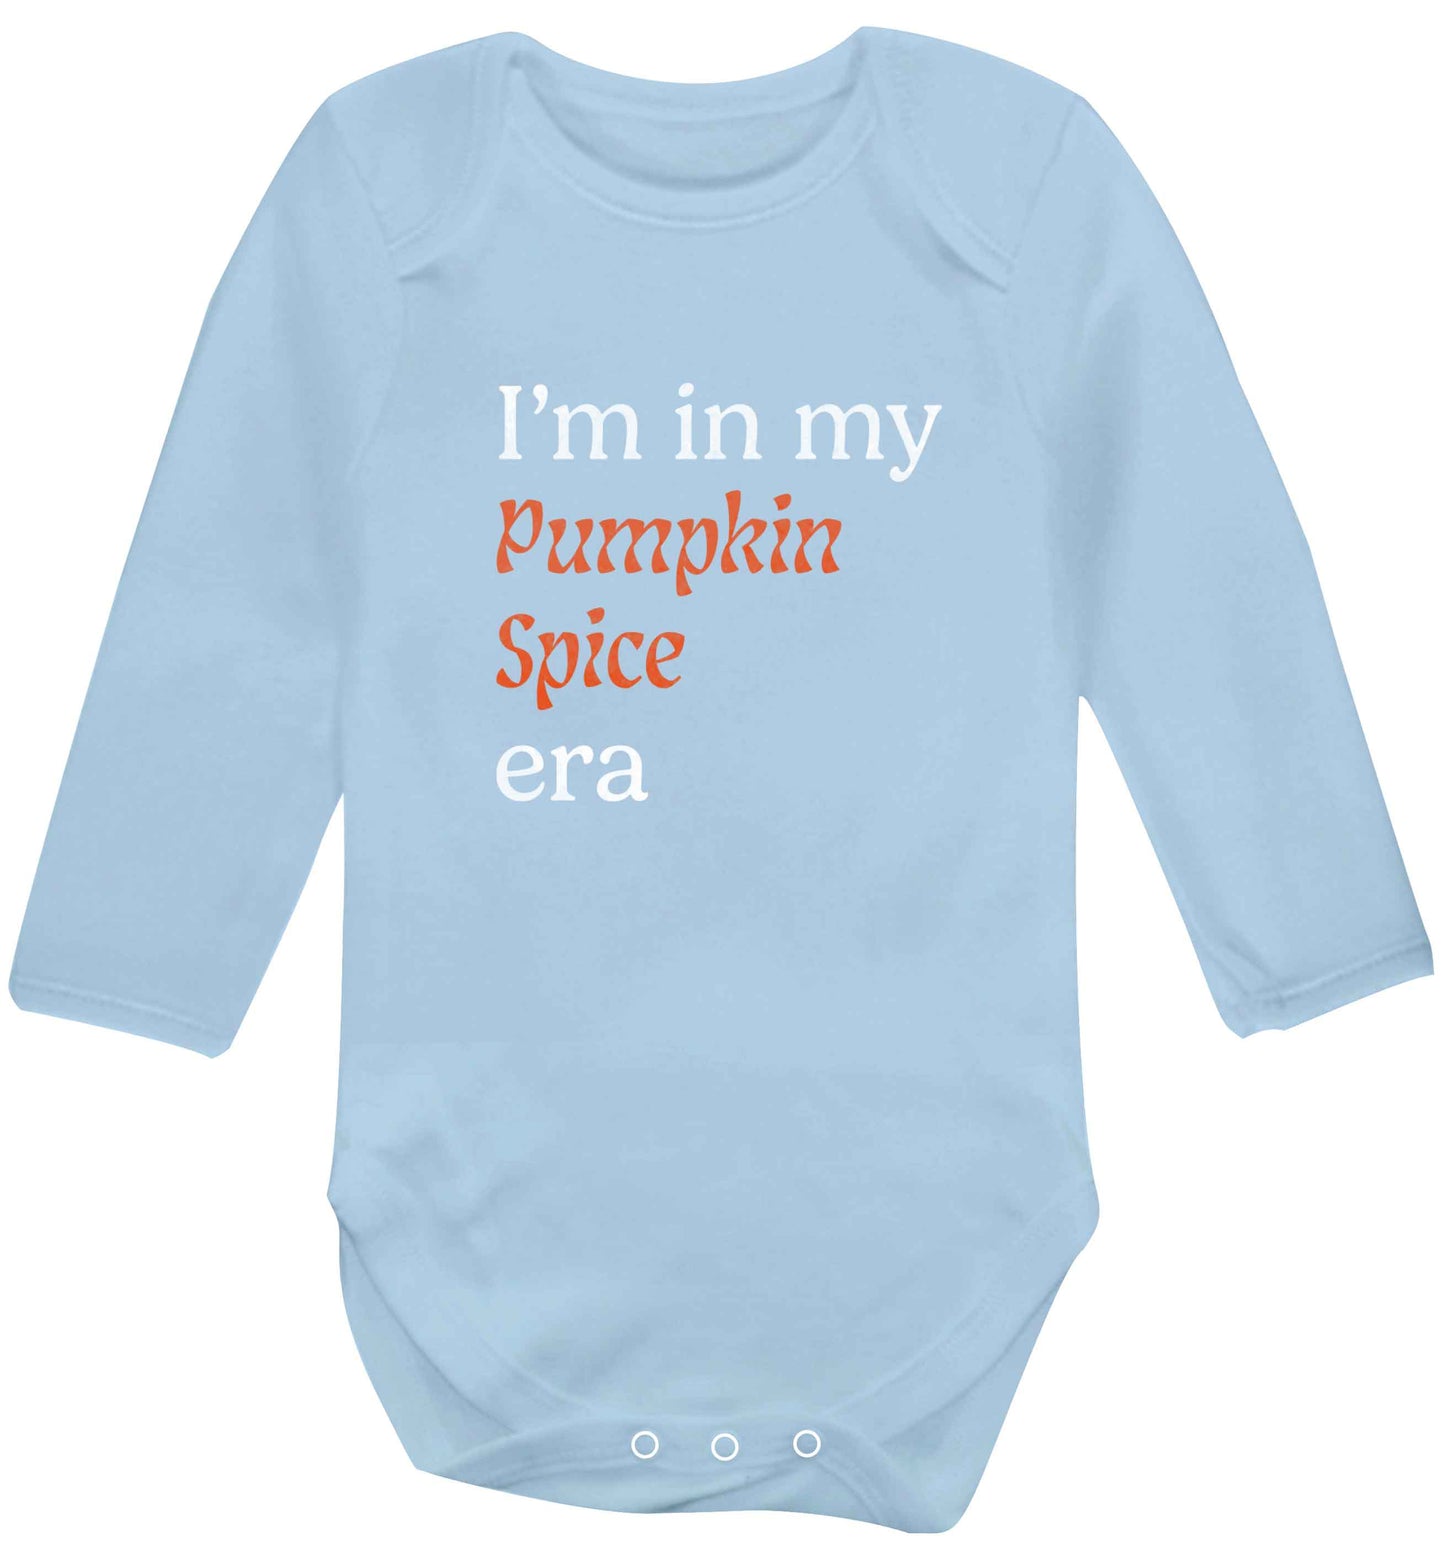 I'm in my pumpkin spice era Kit baby vest long sleeved pale blue 6-12 months